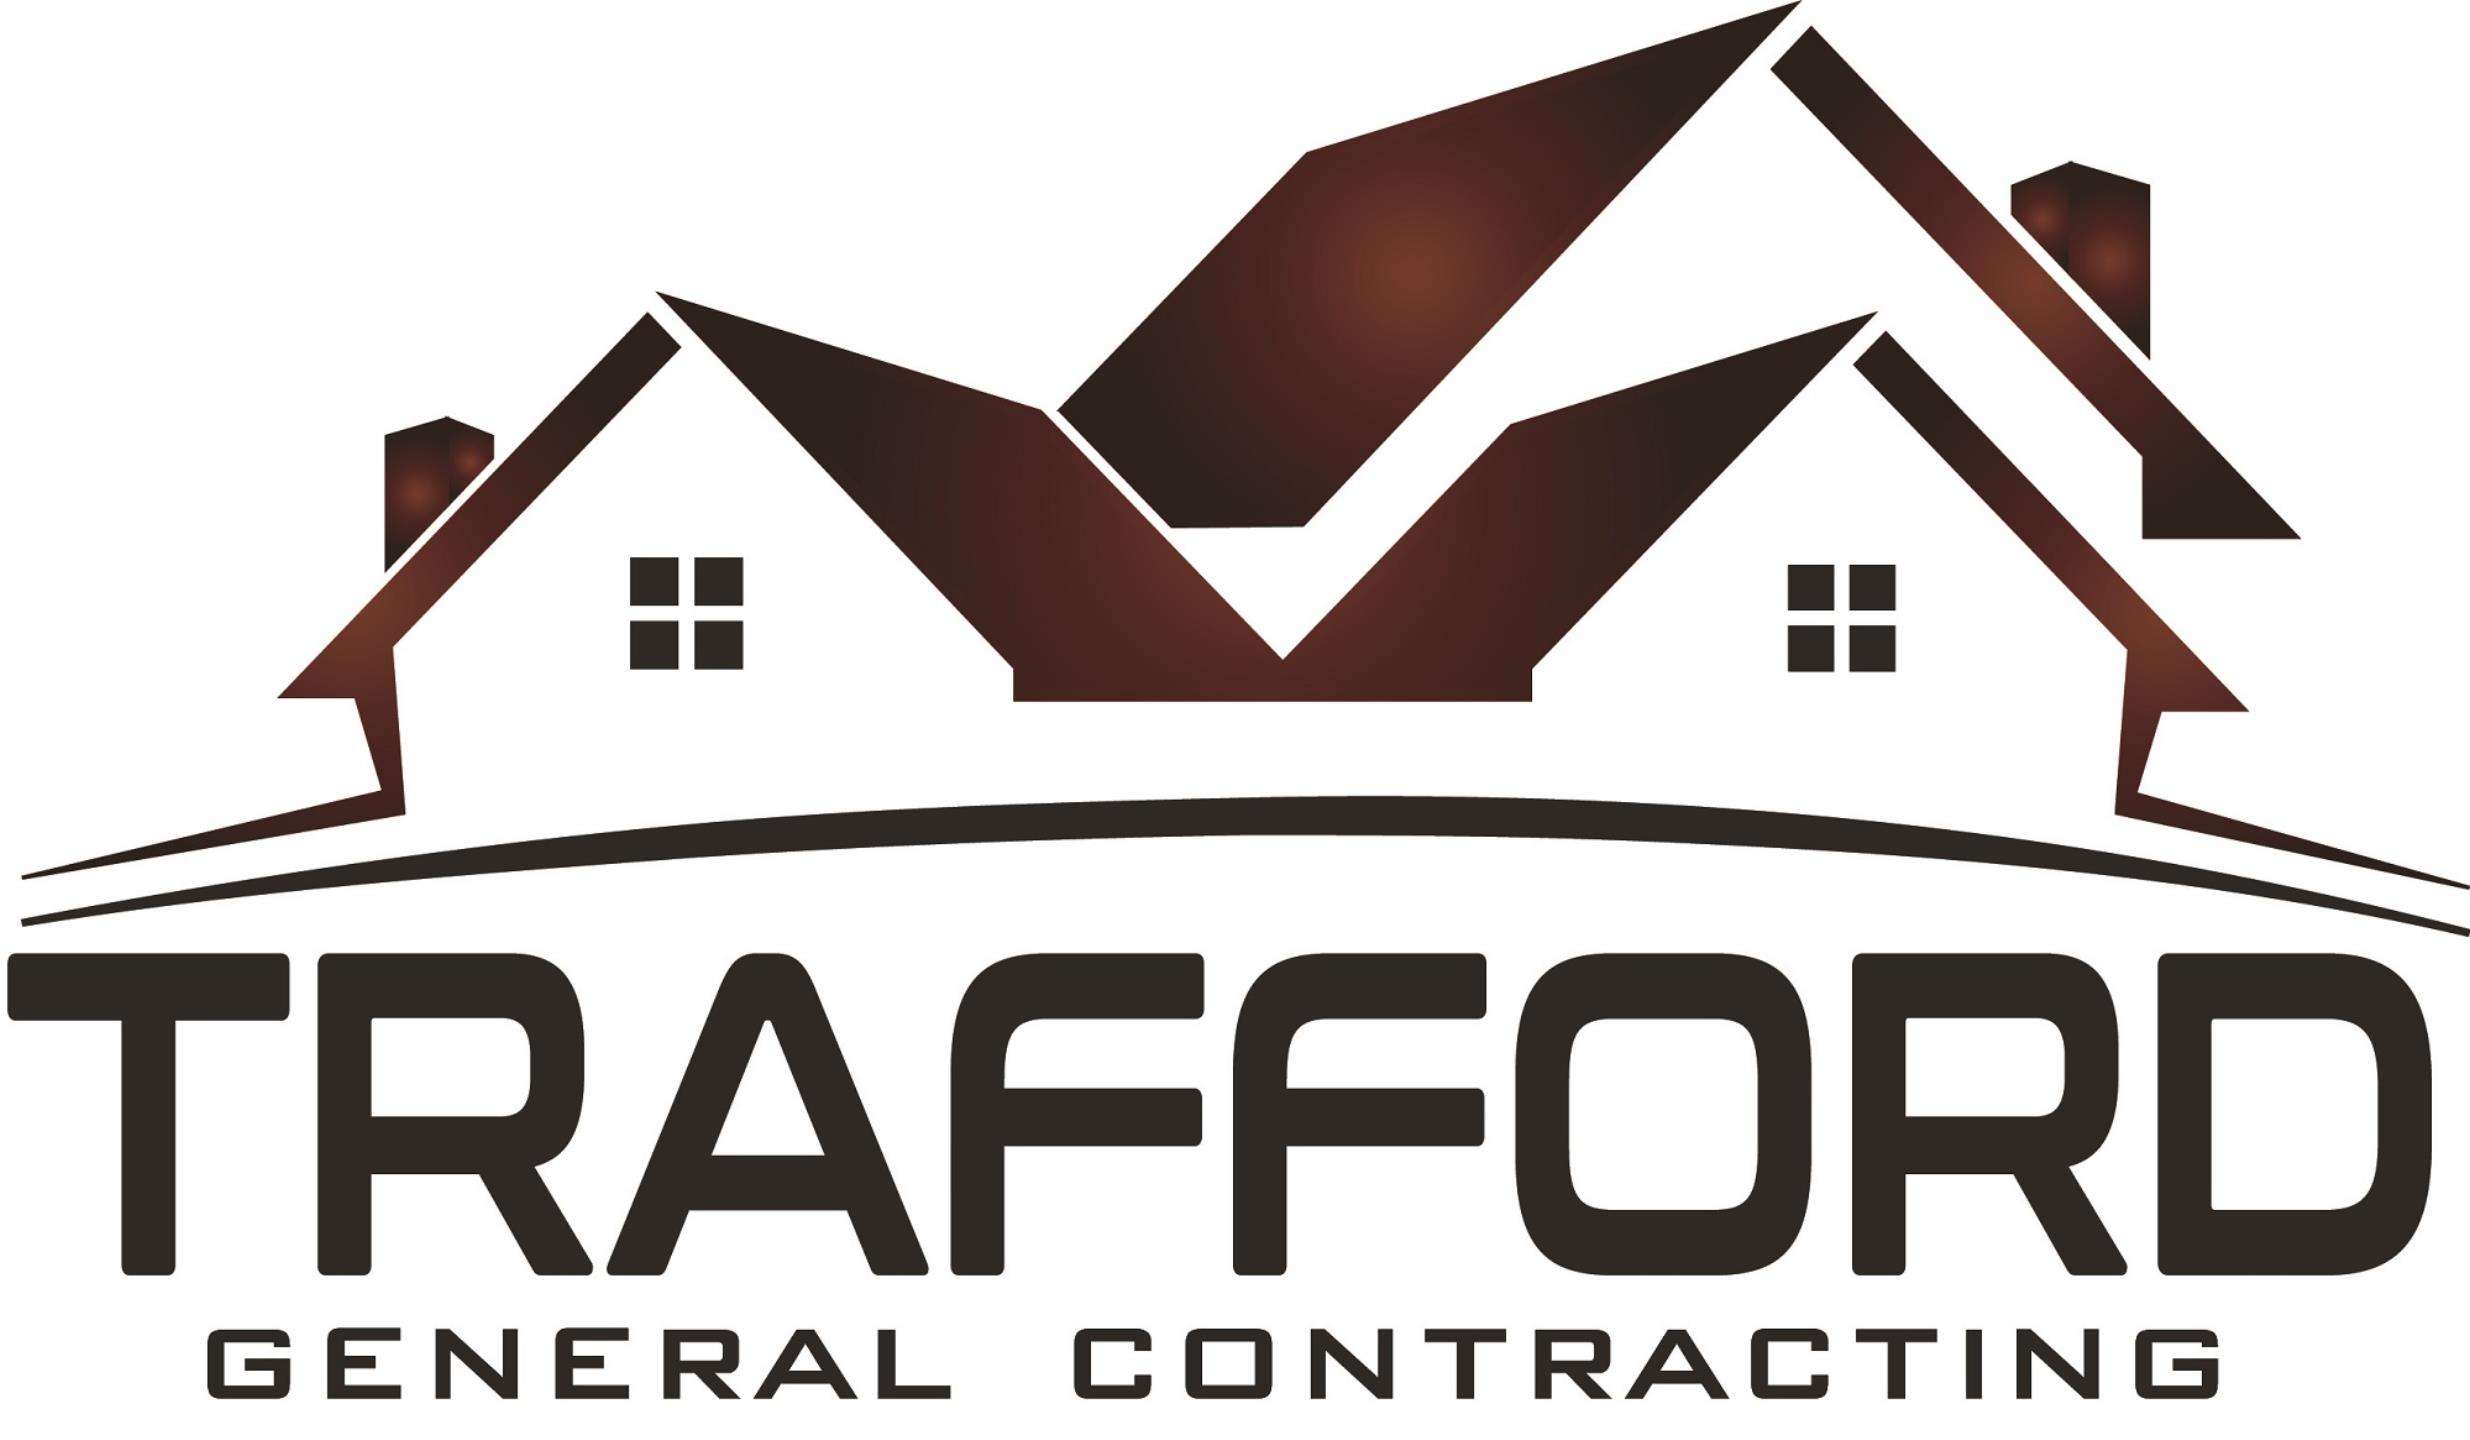 Trafford General Contracting Logo